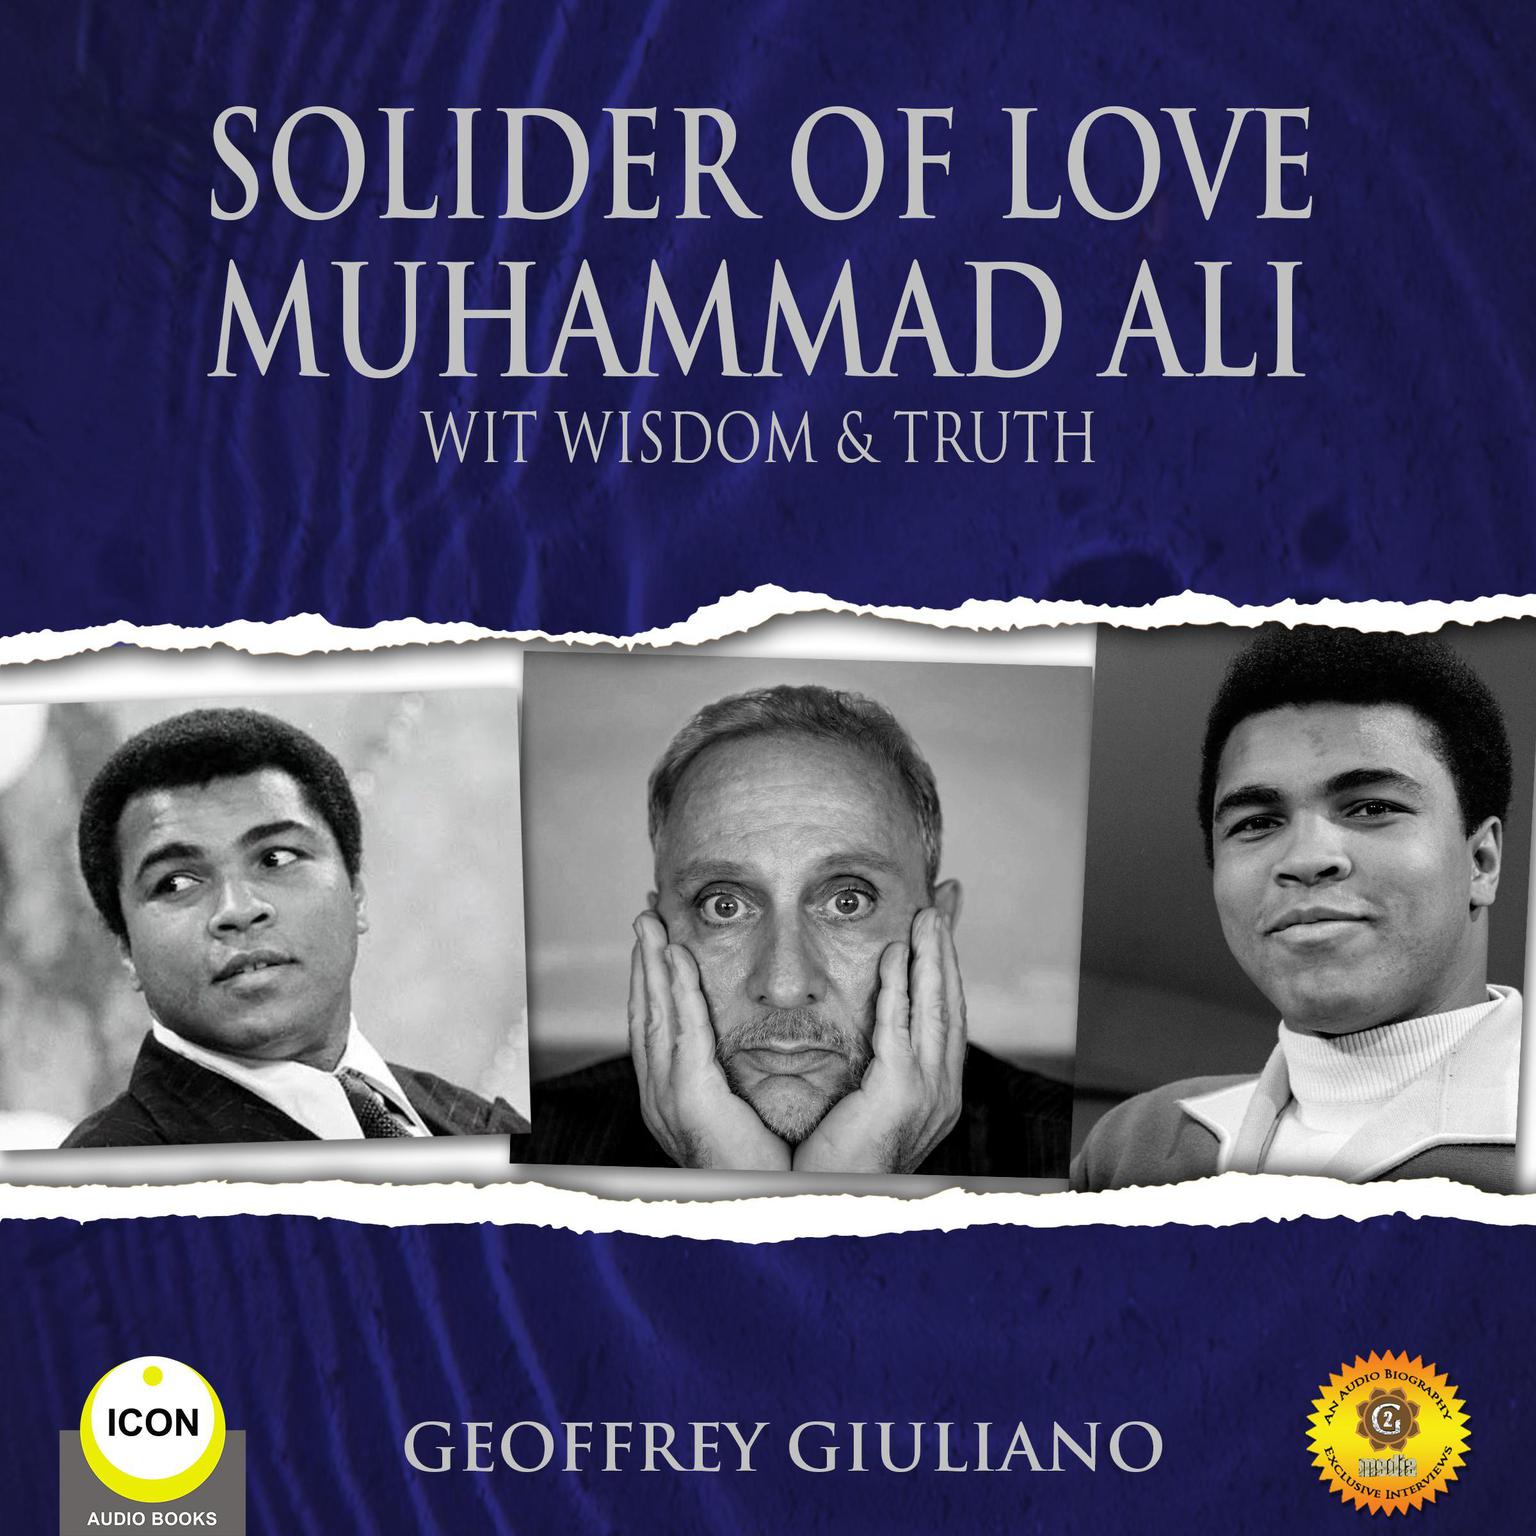 Solider of Love Muhammad Ali - Wit Wisdom & Truth Audiobook, by Geoffrey Giuliano